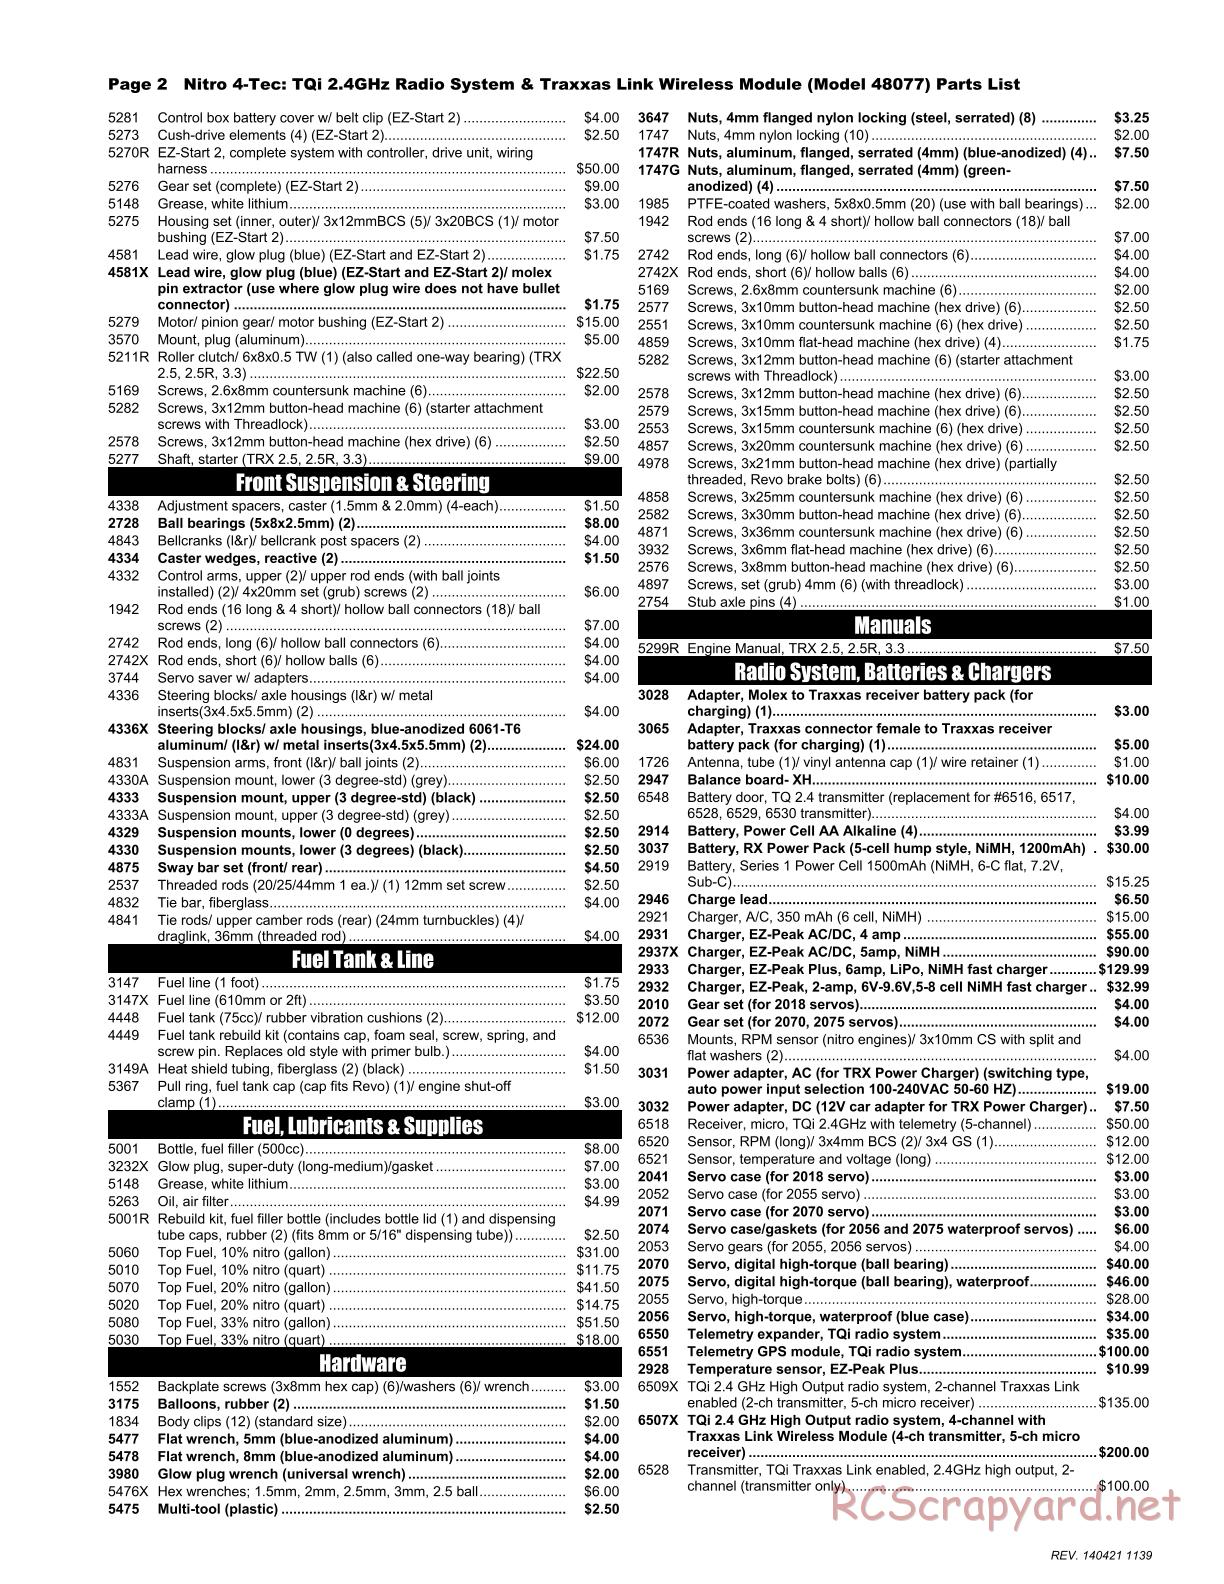 Traxxas - Nitro 4-Tec 3.3 (2014) - Parts List - Page 2